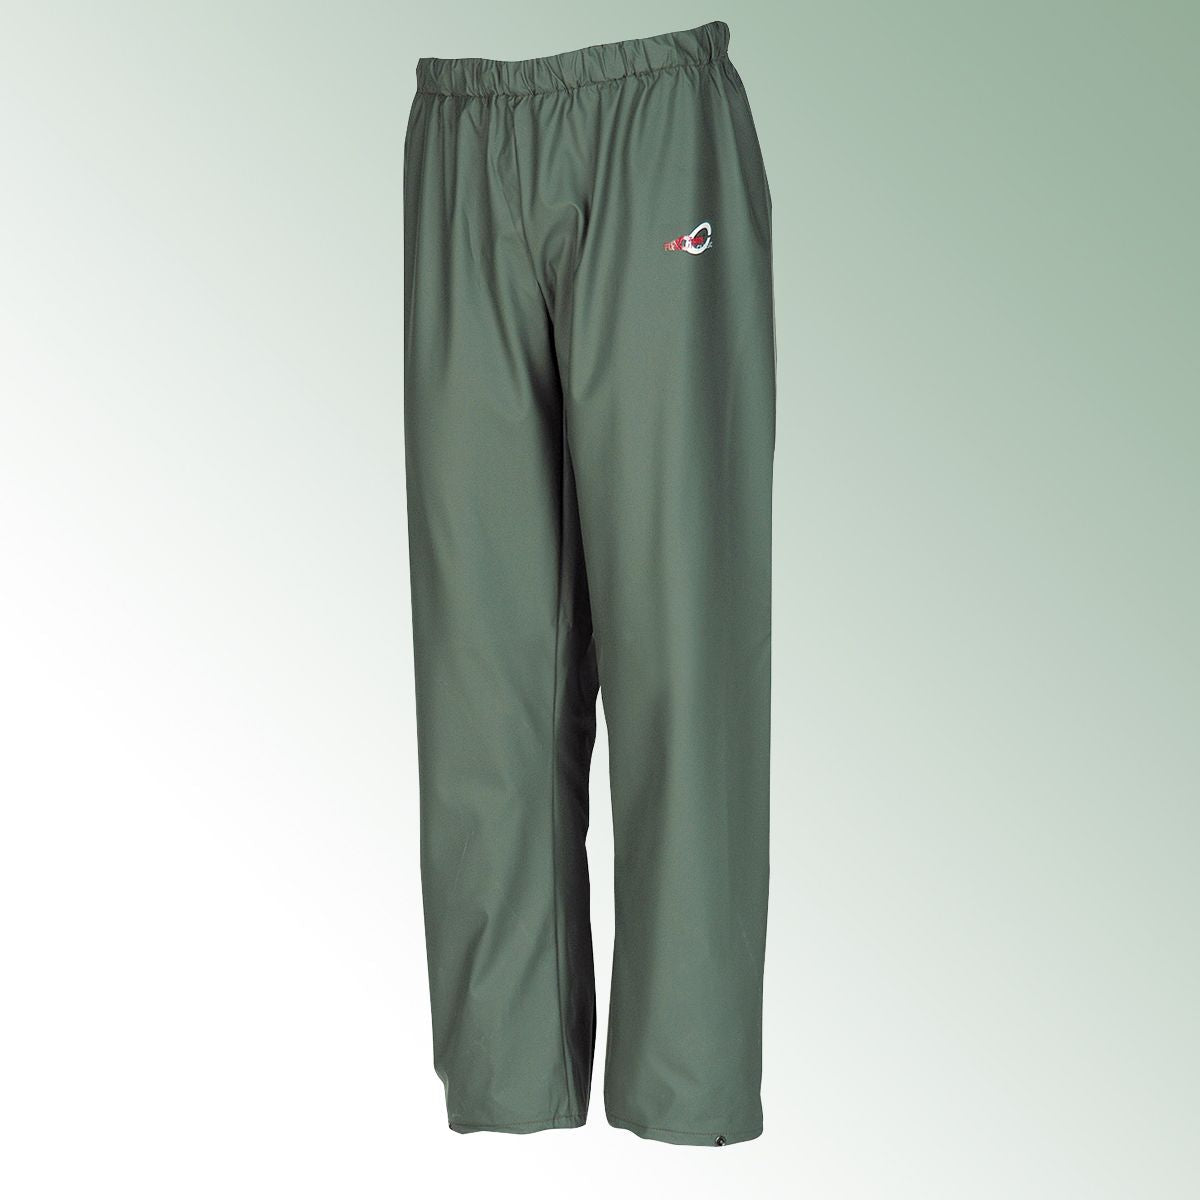 Rain trousers Flexothane size 3XL - olive green model 4500